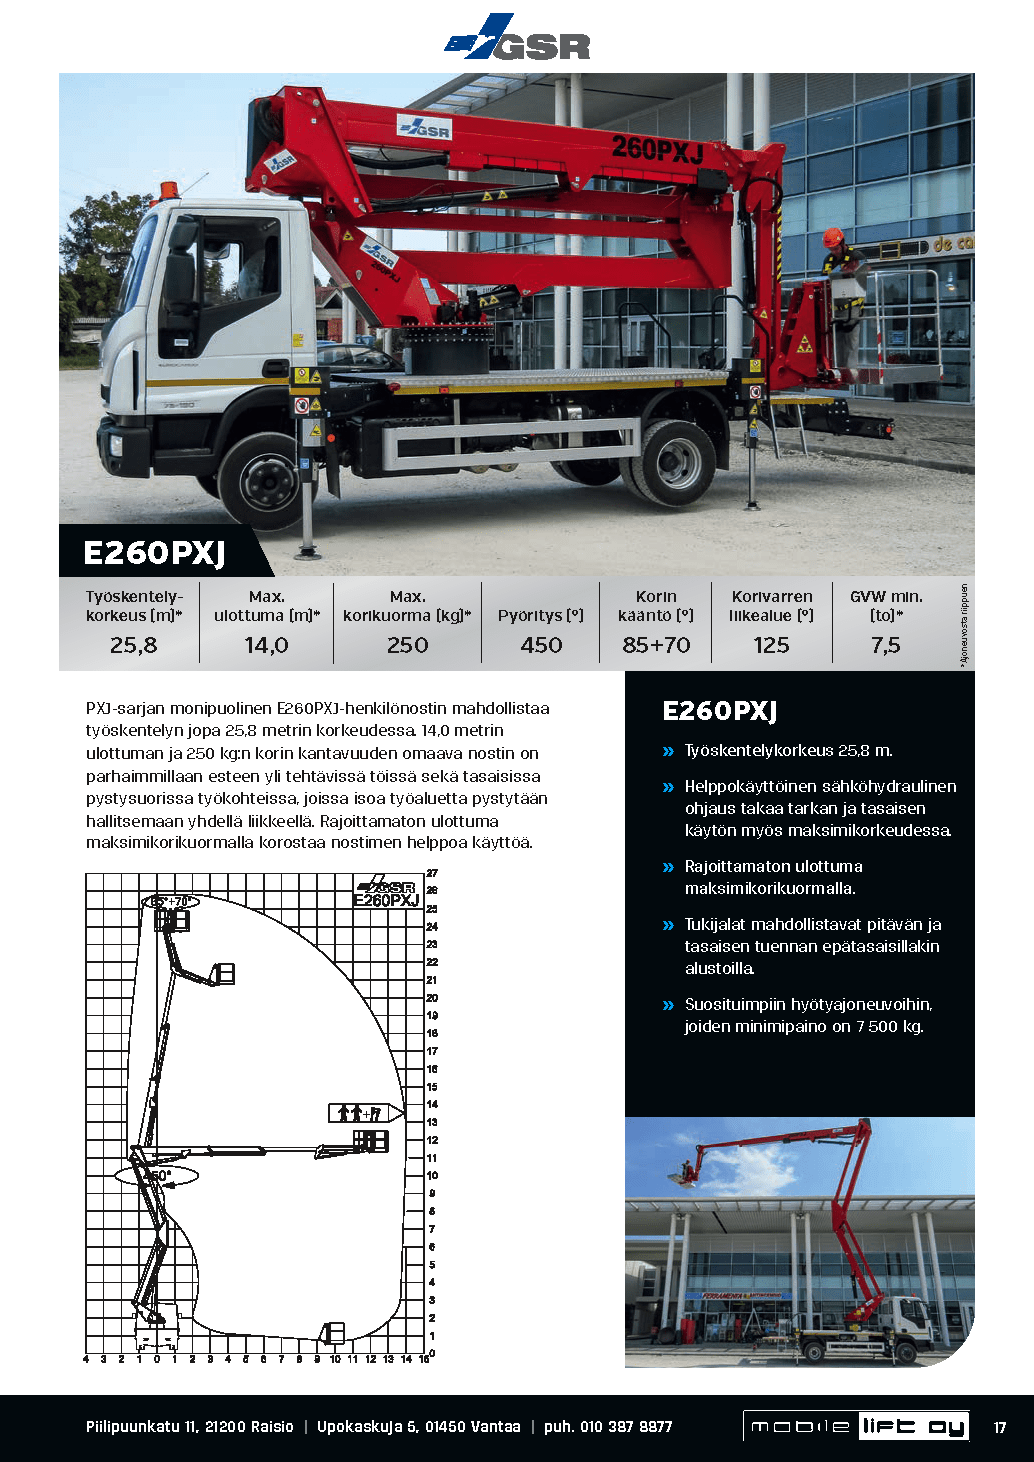 Mobile Lift Oy - E260PXJ